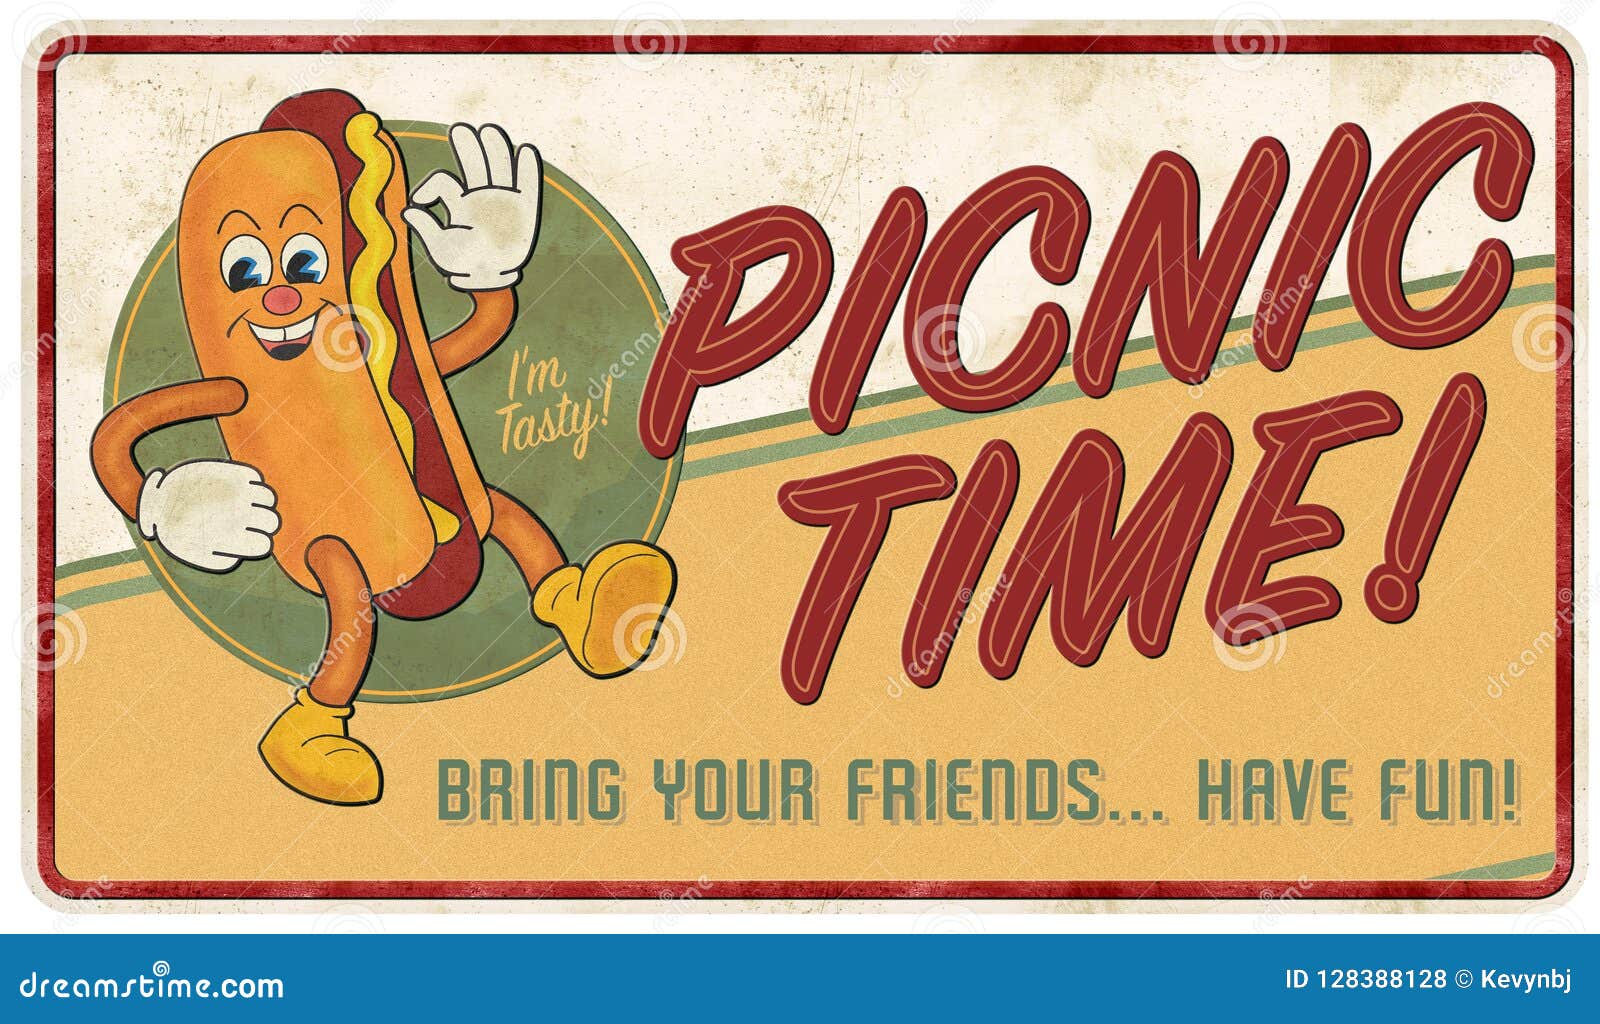 vintage picnic sign hot dog burgers grill fun friends inviation